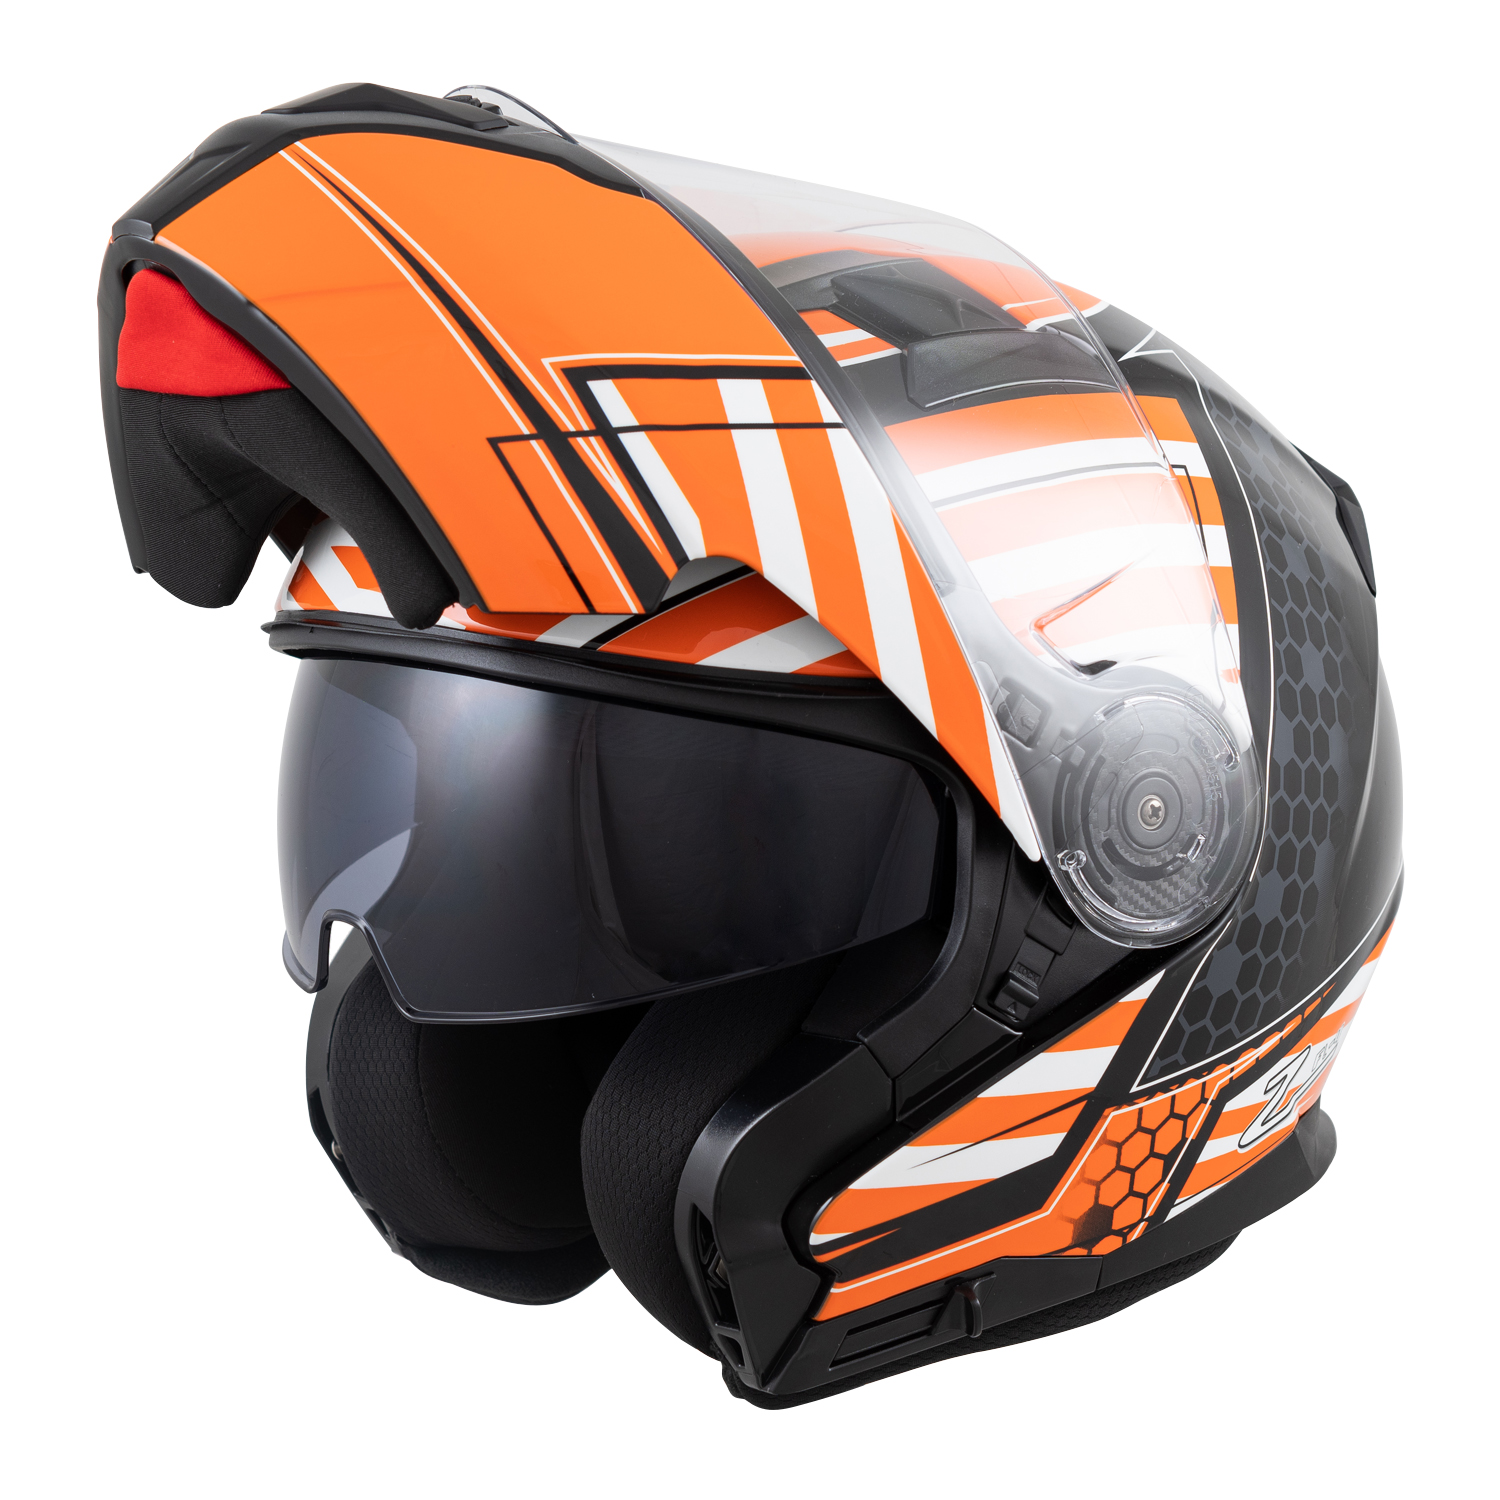 FL-4 Orange Graphic Helmet